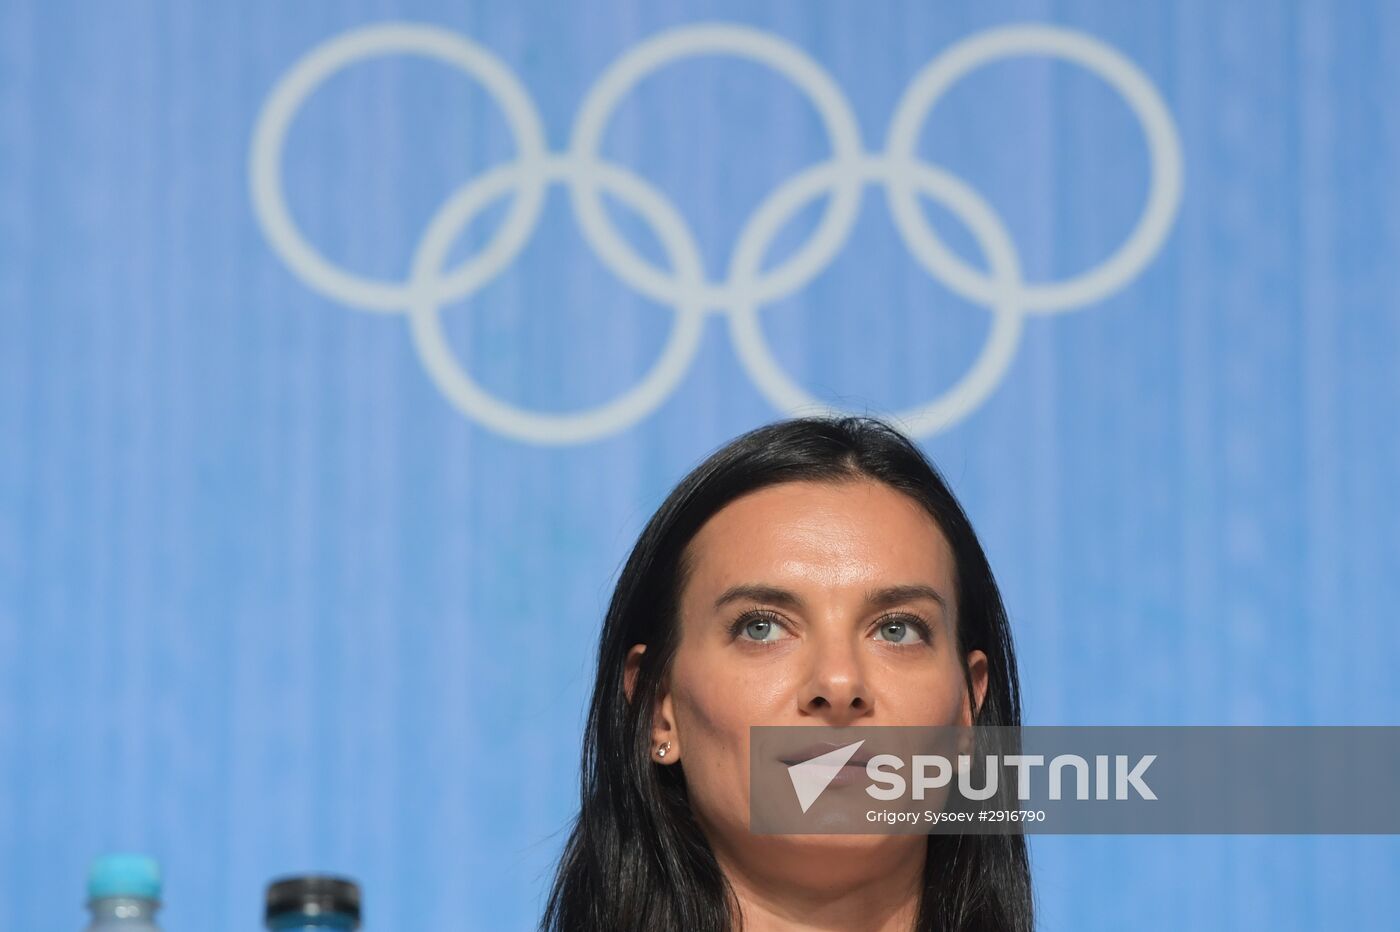 Yelena Isinbayeva ends her sports career